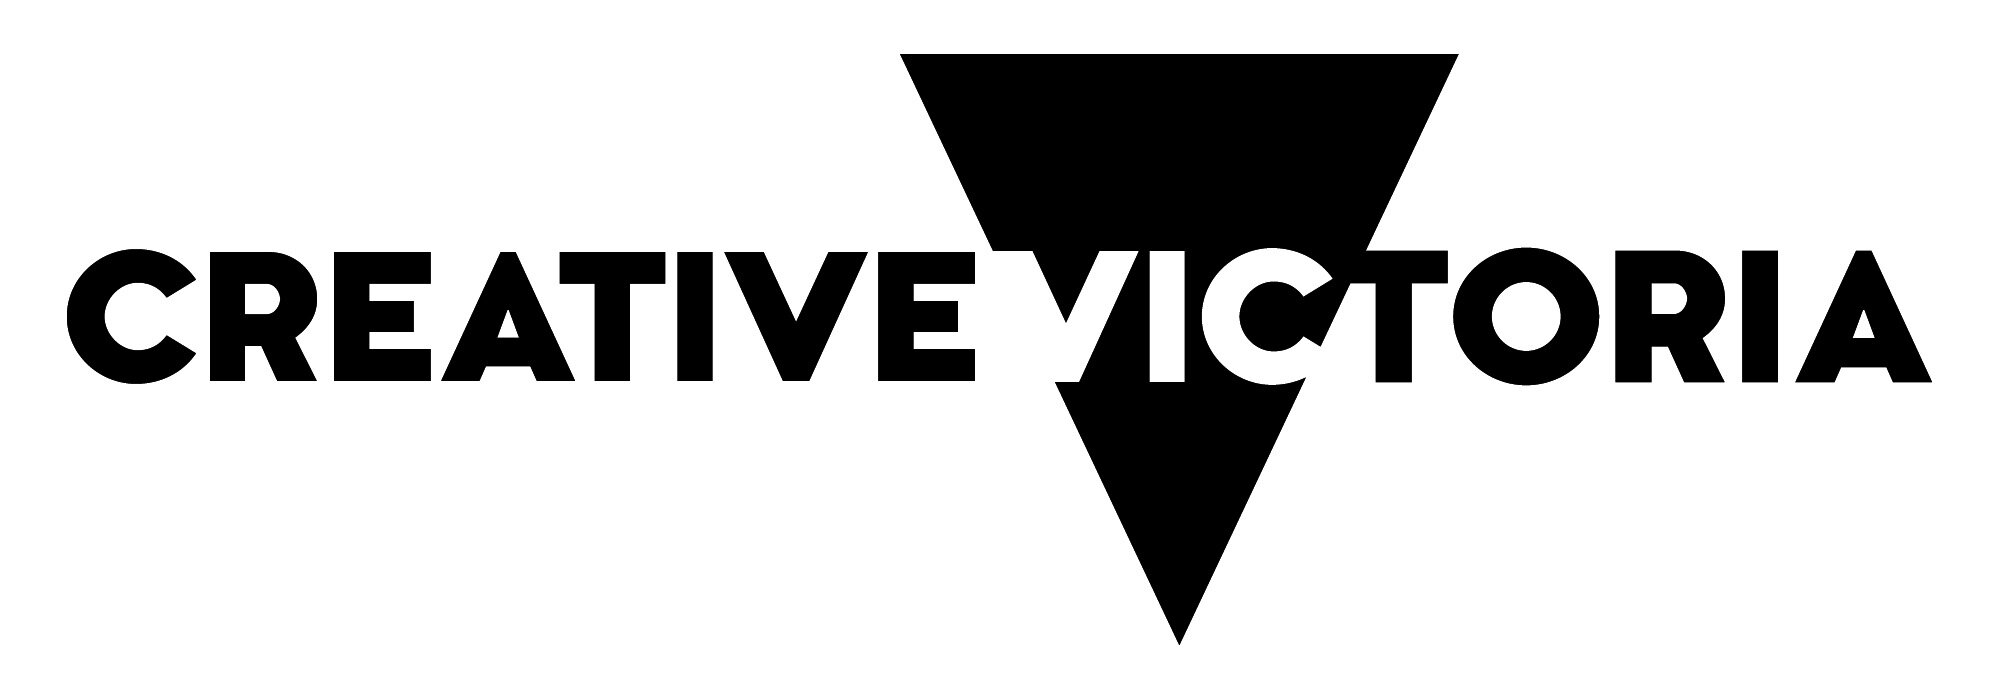 CreativeVictoria_logo-print.jpg